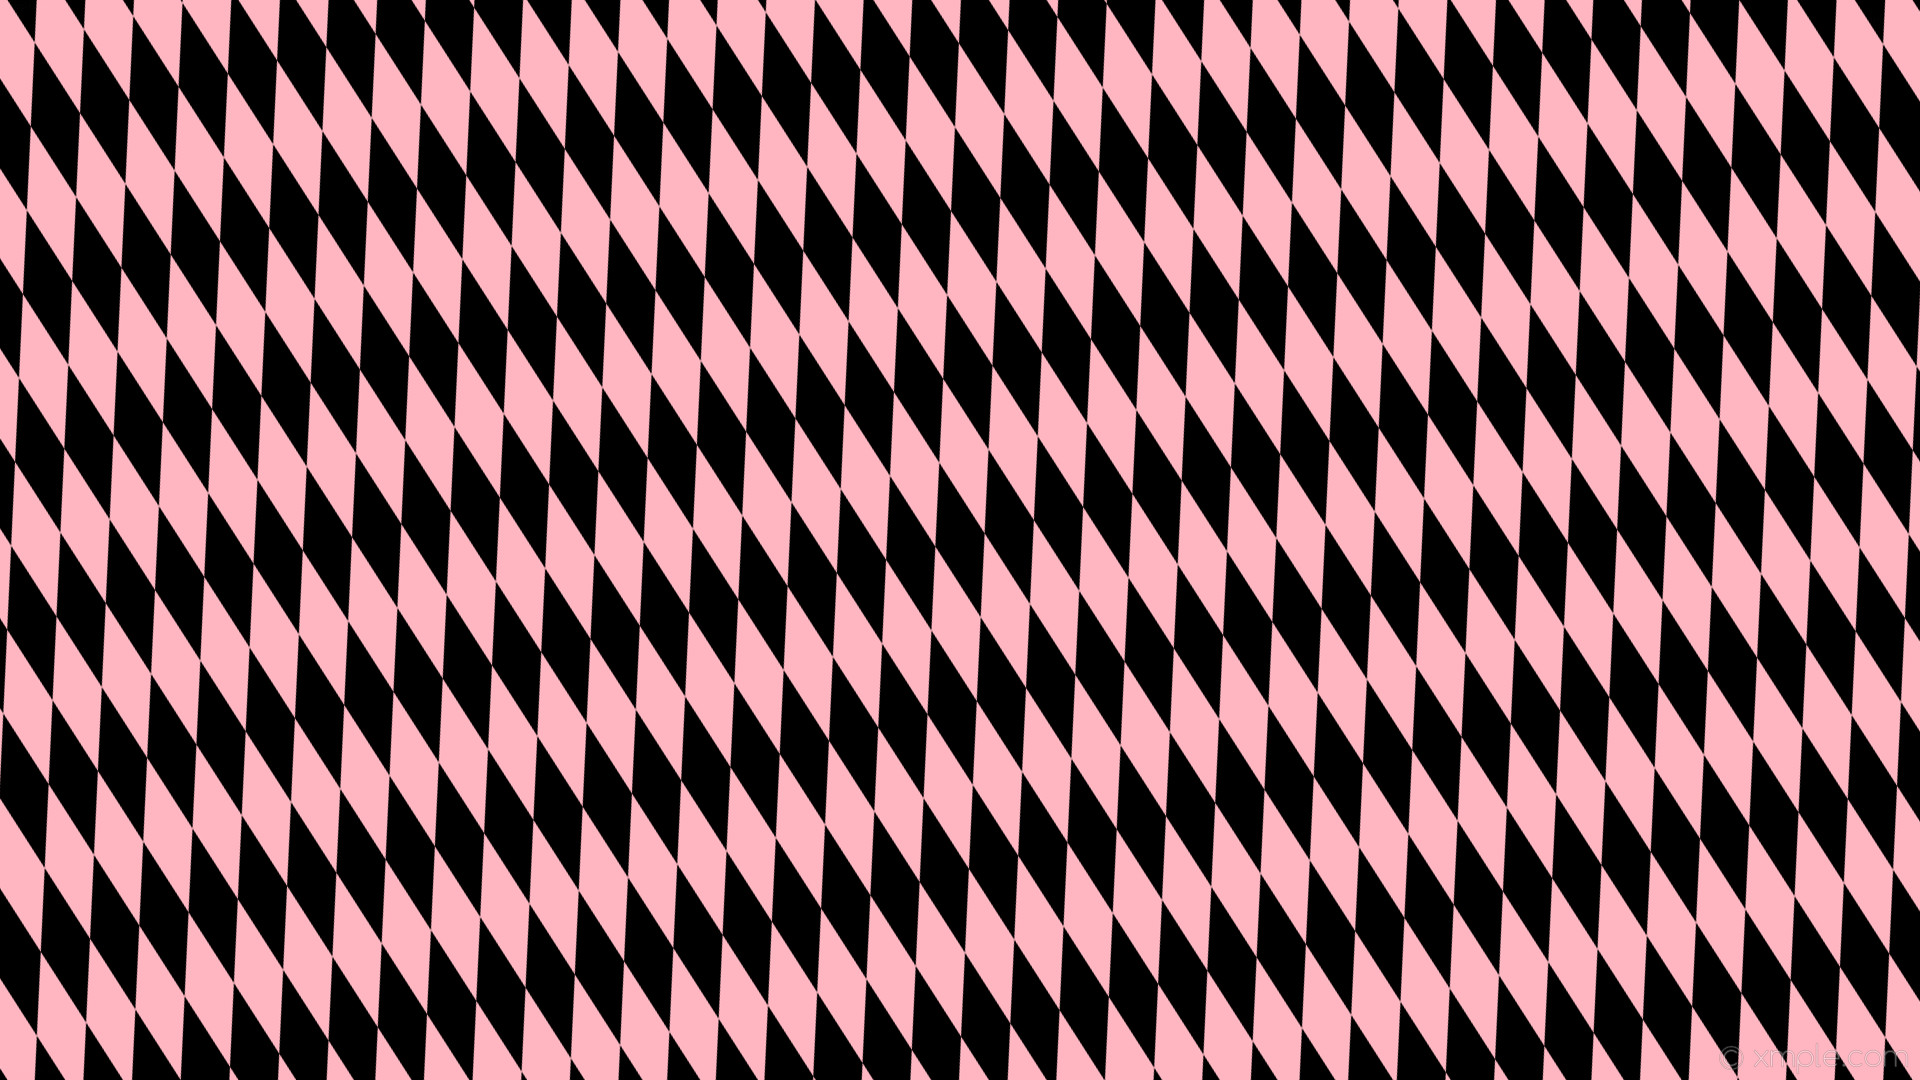 1920x1080 wallpaper rhombus black pink diamond lozenge light pink #000000 #ffb6c1  105Â° 160px 51px